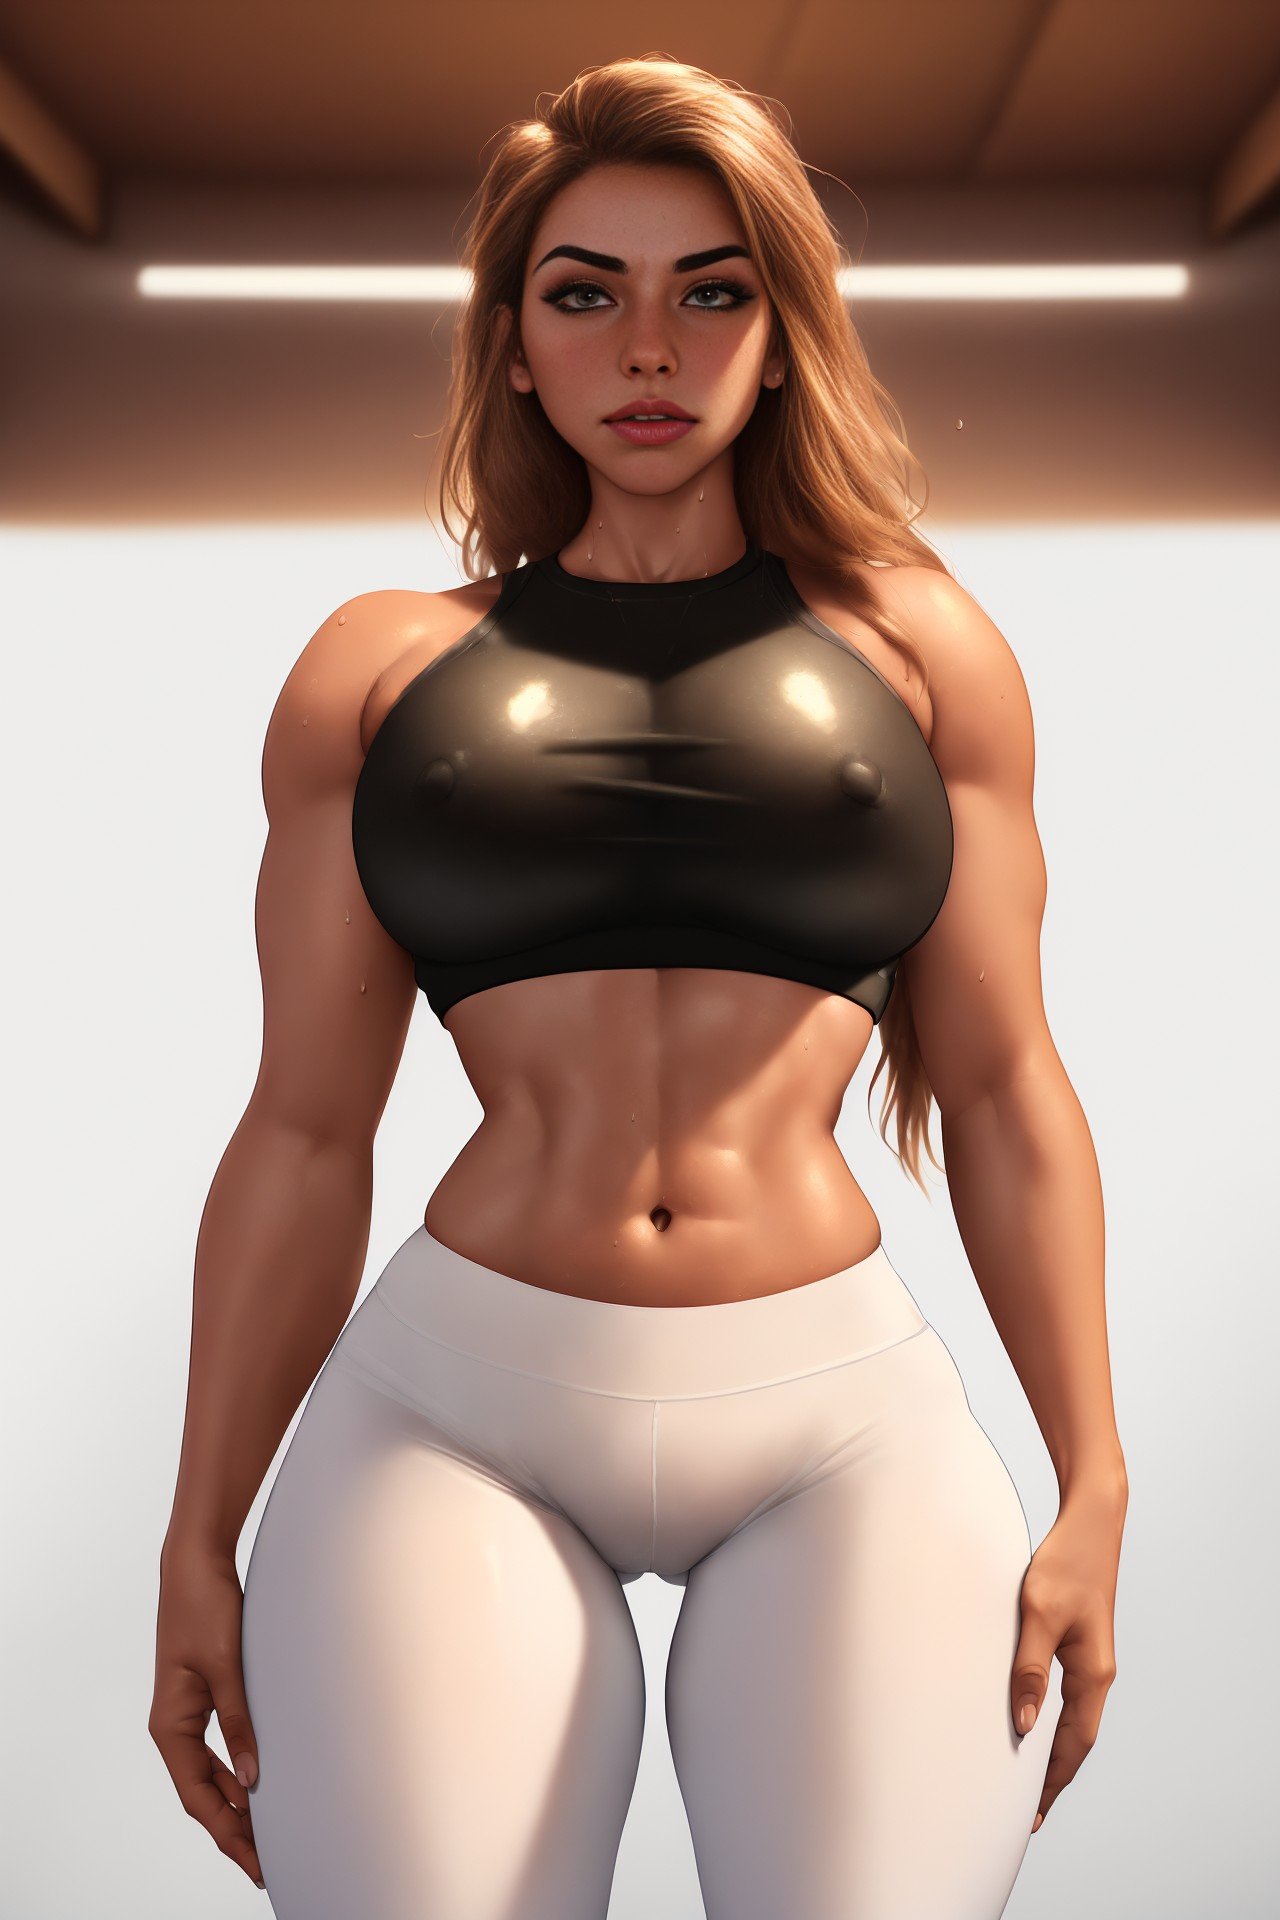 Huge boob gym girls